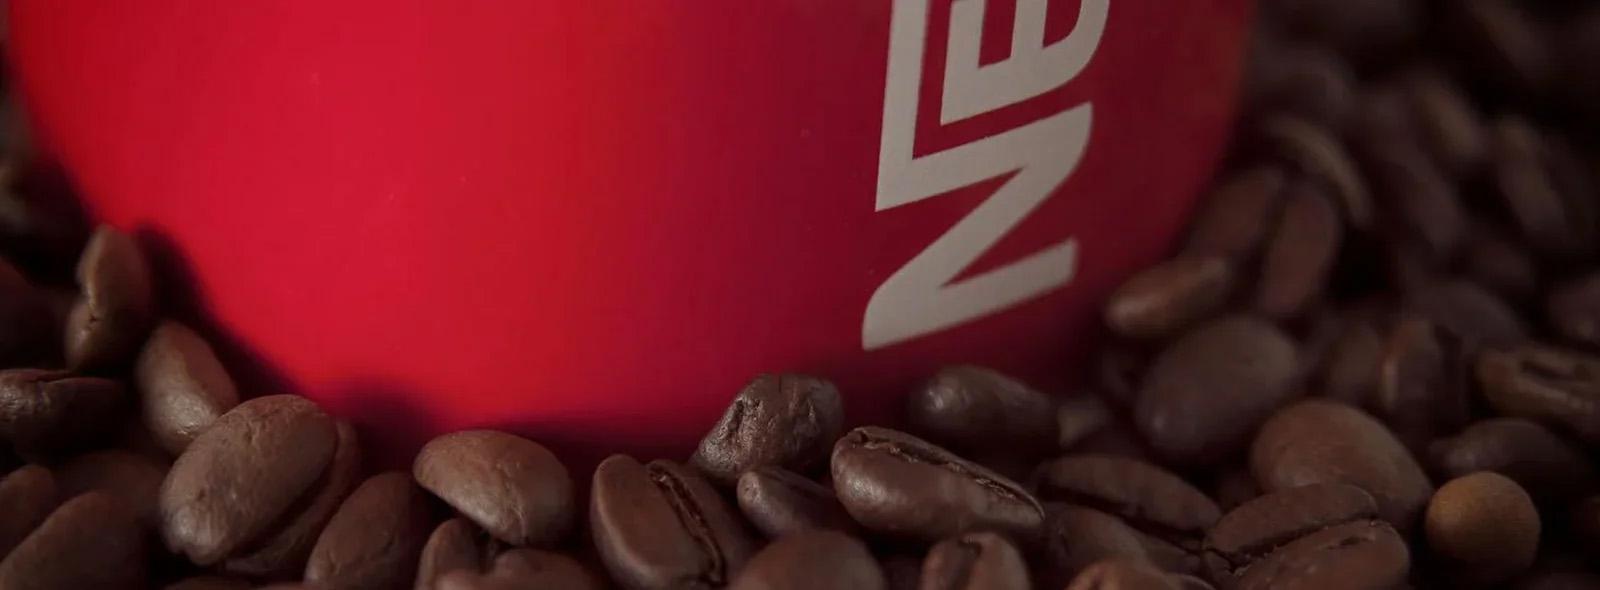 nescafe-red-mug-among-coffee-beans